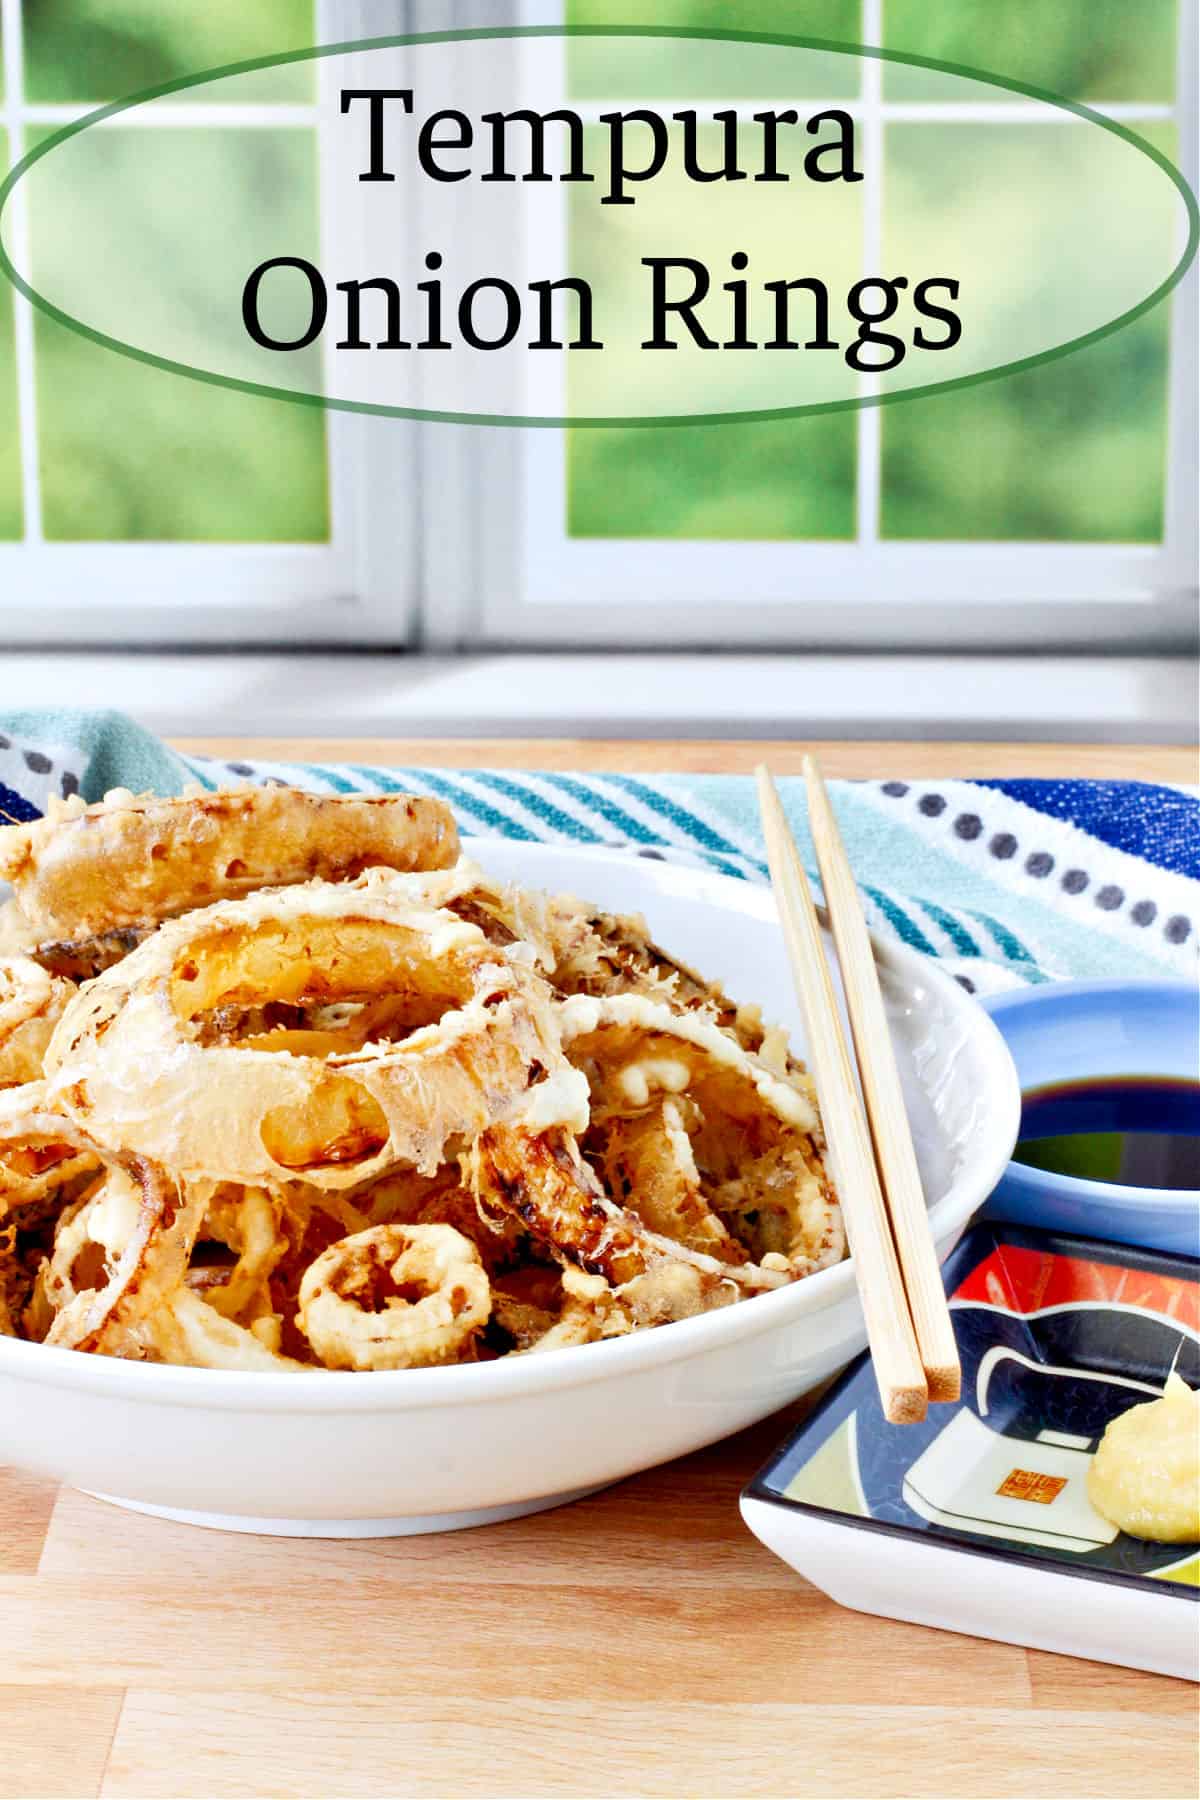 Onion Rings - Oishi | Onion rings, Onion, Dehydrate potatoes